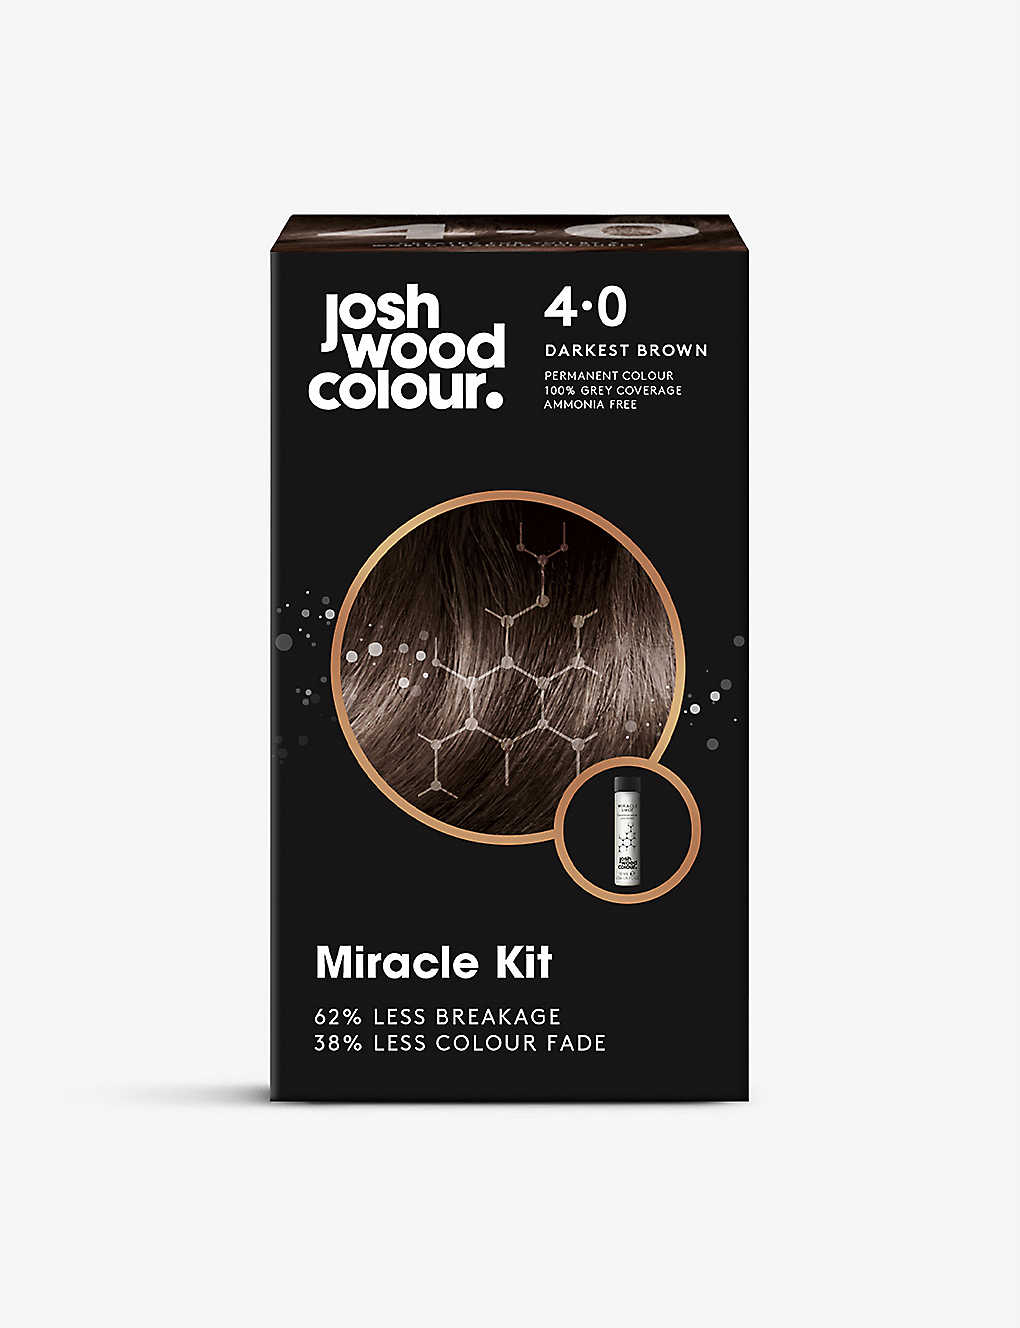 Josh Wood Colour Colour Miracle Kit Permanent Hair Dye In 4.0 Darkest Brown